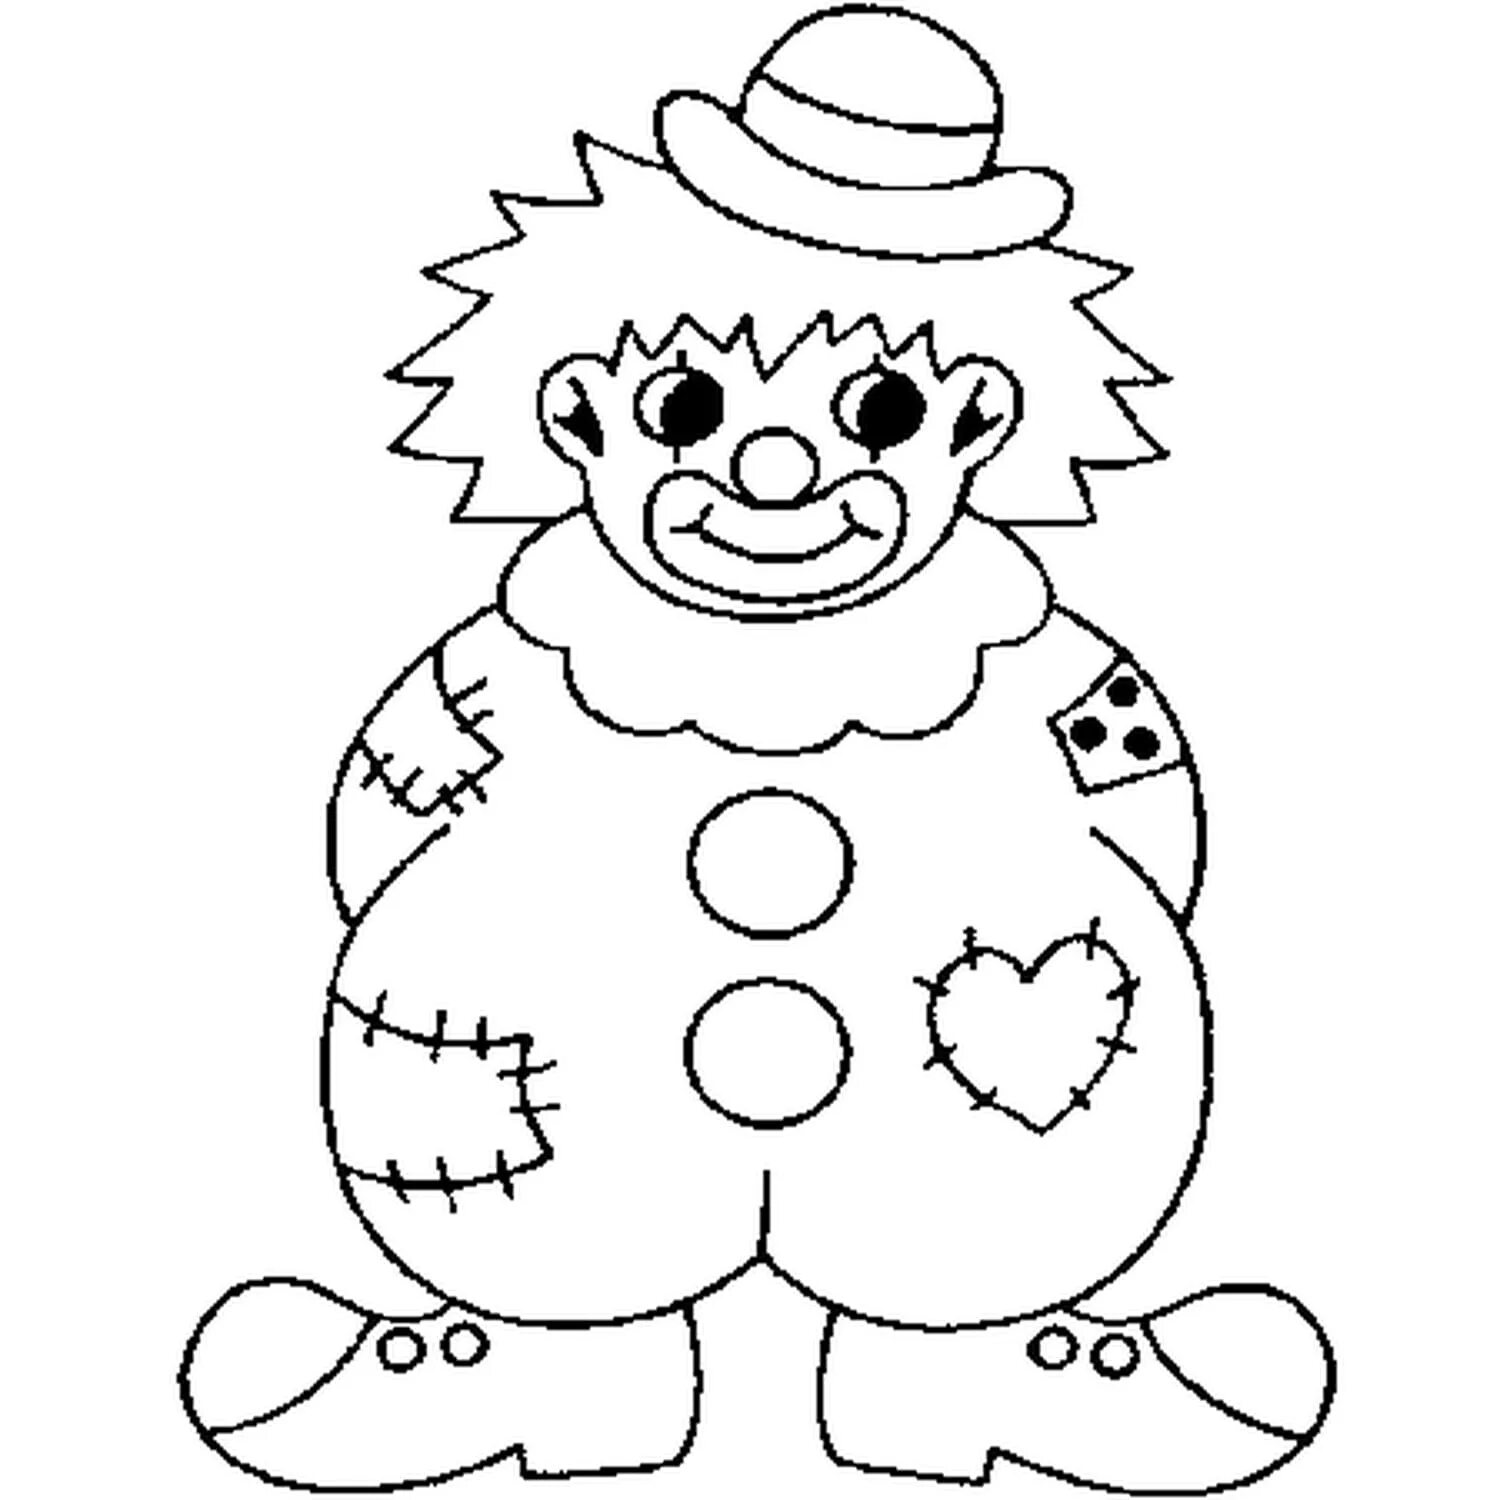 Клоун раскраска для детей 4 5 лет. Клоун раскраска. Клоун раскраска для малышей. Клоун раскраска для детей. Раскраска весёлый клоун для детей.